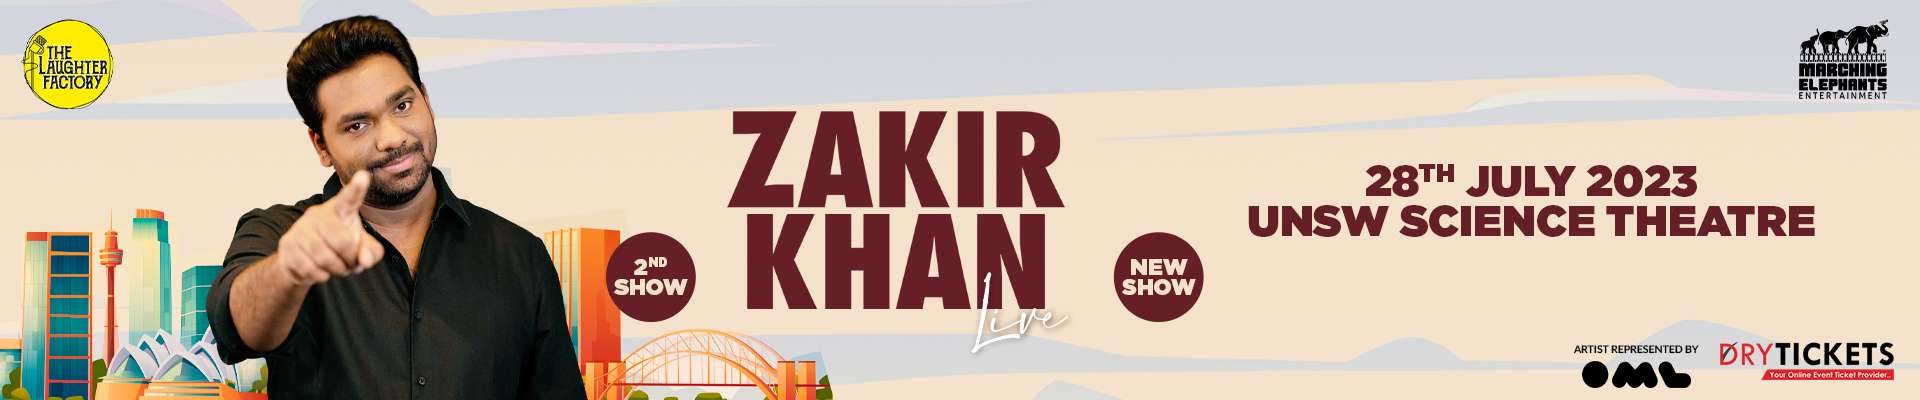 Zakir Khan Live In Sydney 2nd Show